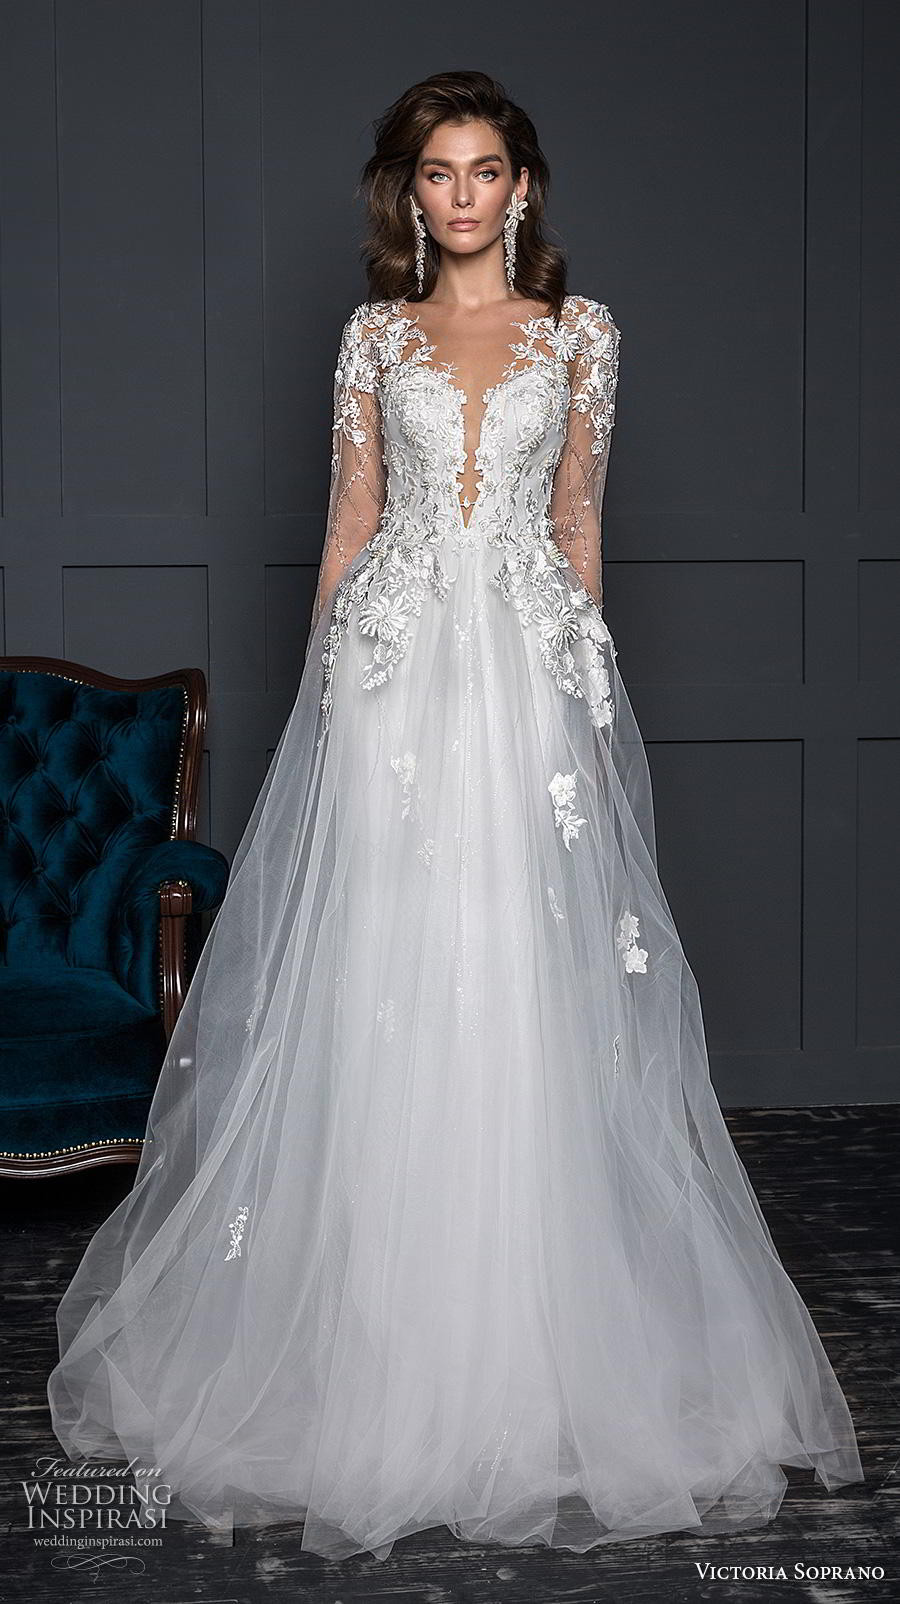 Best Wedding Dresses 2020
 Victoria Soprano 2020 Wedding Dresses — “Chic Royal